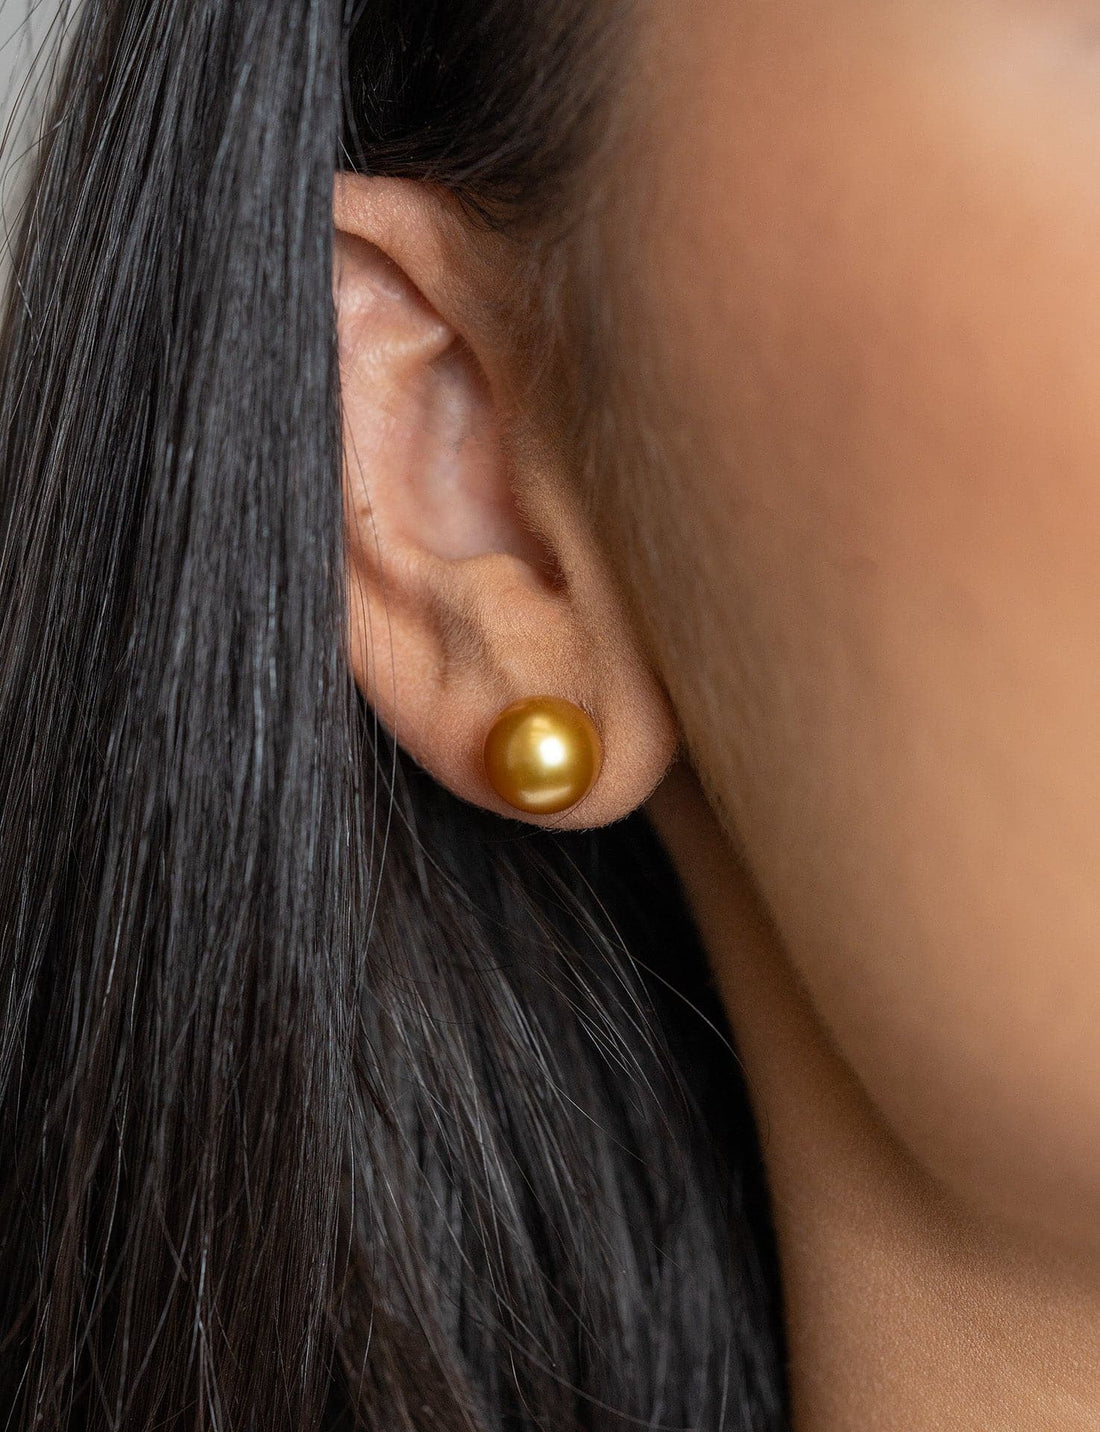 Mikimoto Golden South Sea Pearl Earrings Studs in 18k Gold - Skeie's Jewelers